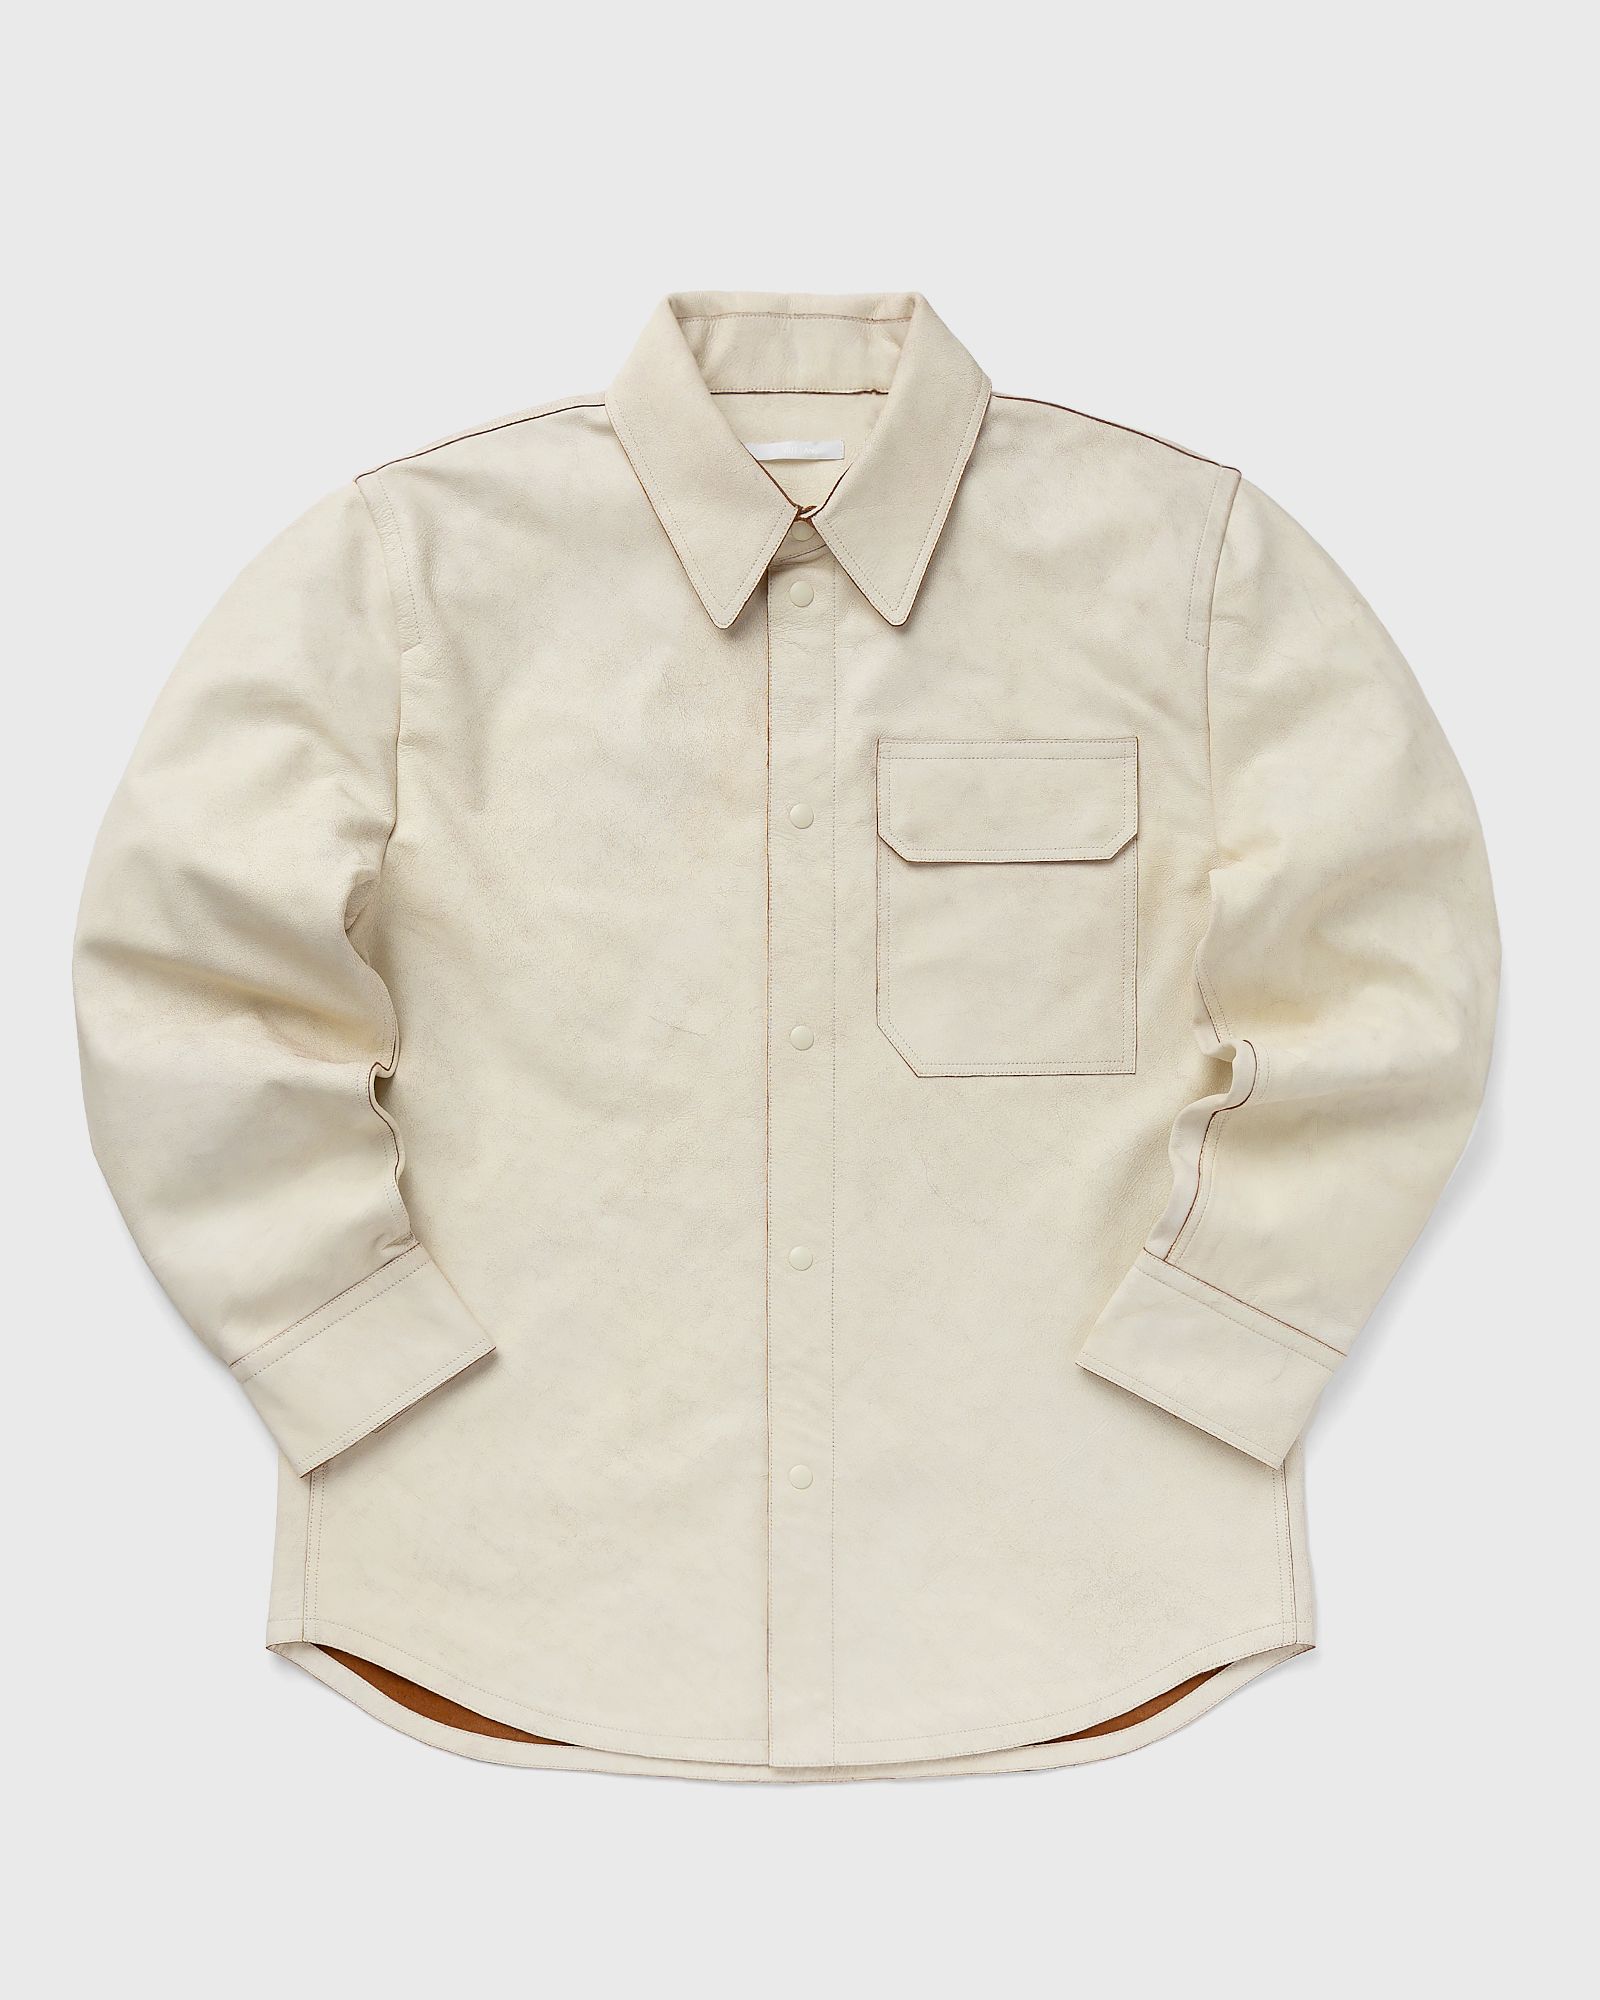 Helmut Lang - leather shirt.crckd men overshirts white in größe:l